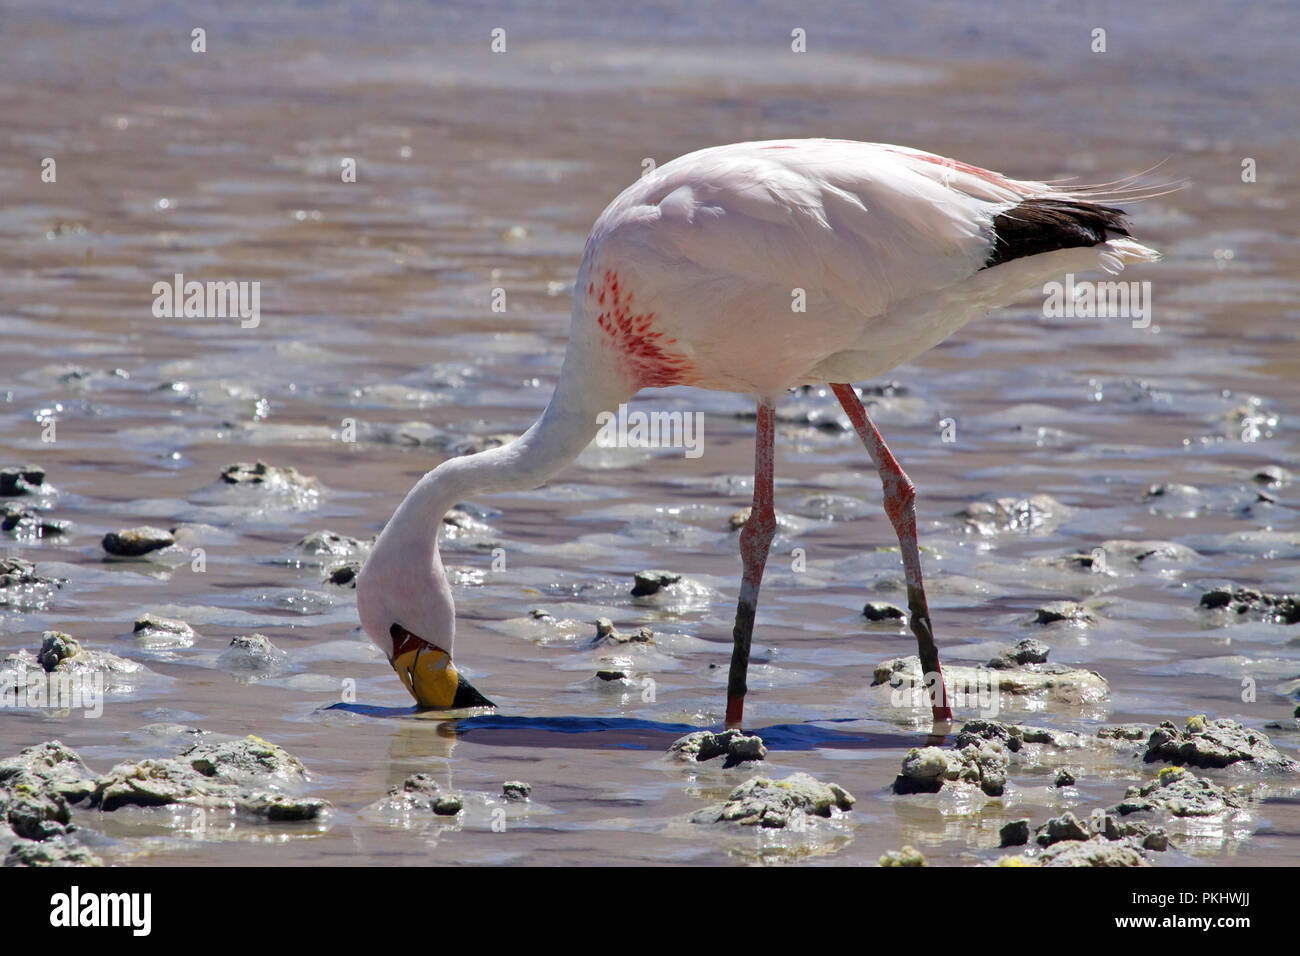 James's Flamingo (Phoenicopterus jamesi), also known as the Puna Flamingo, is a South American flamingo. Laguna Blanca, Bolivia. Stock Photo